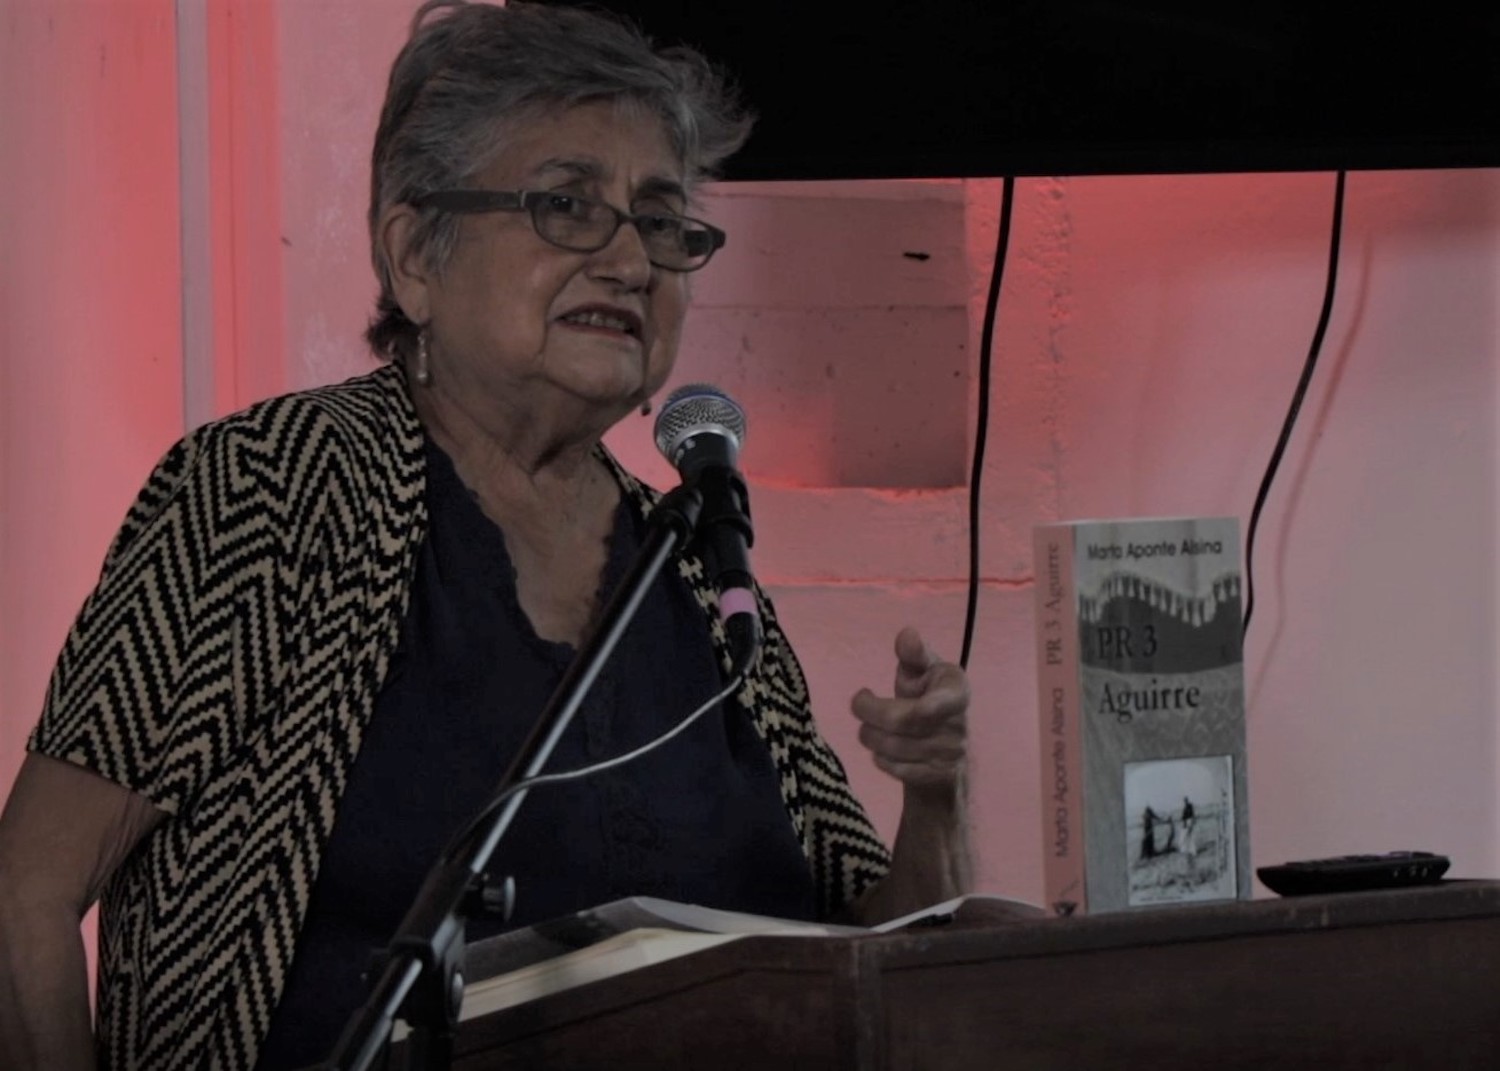 Marta Aponte Alsina presents her book, Aguirre PR3.